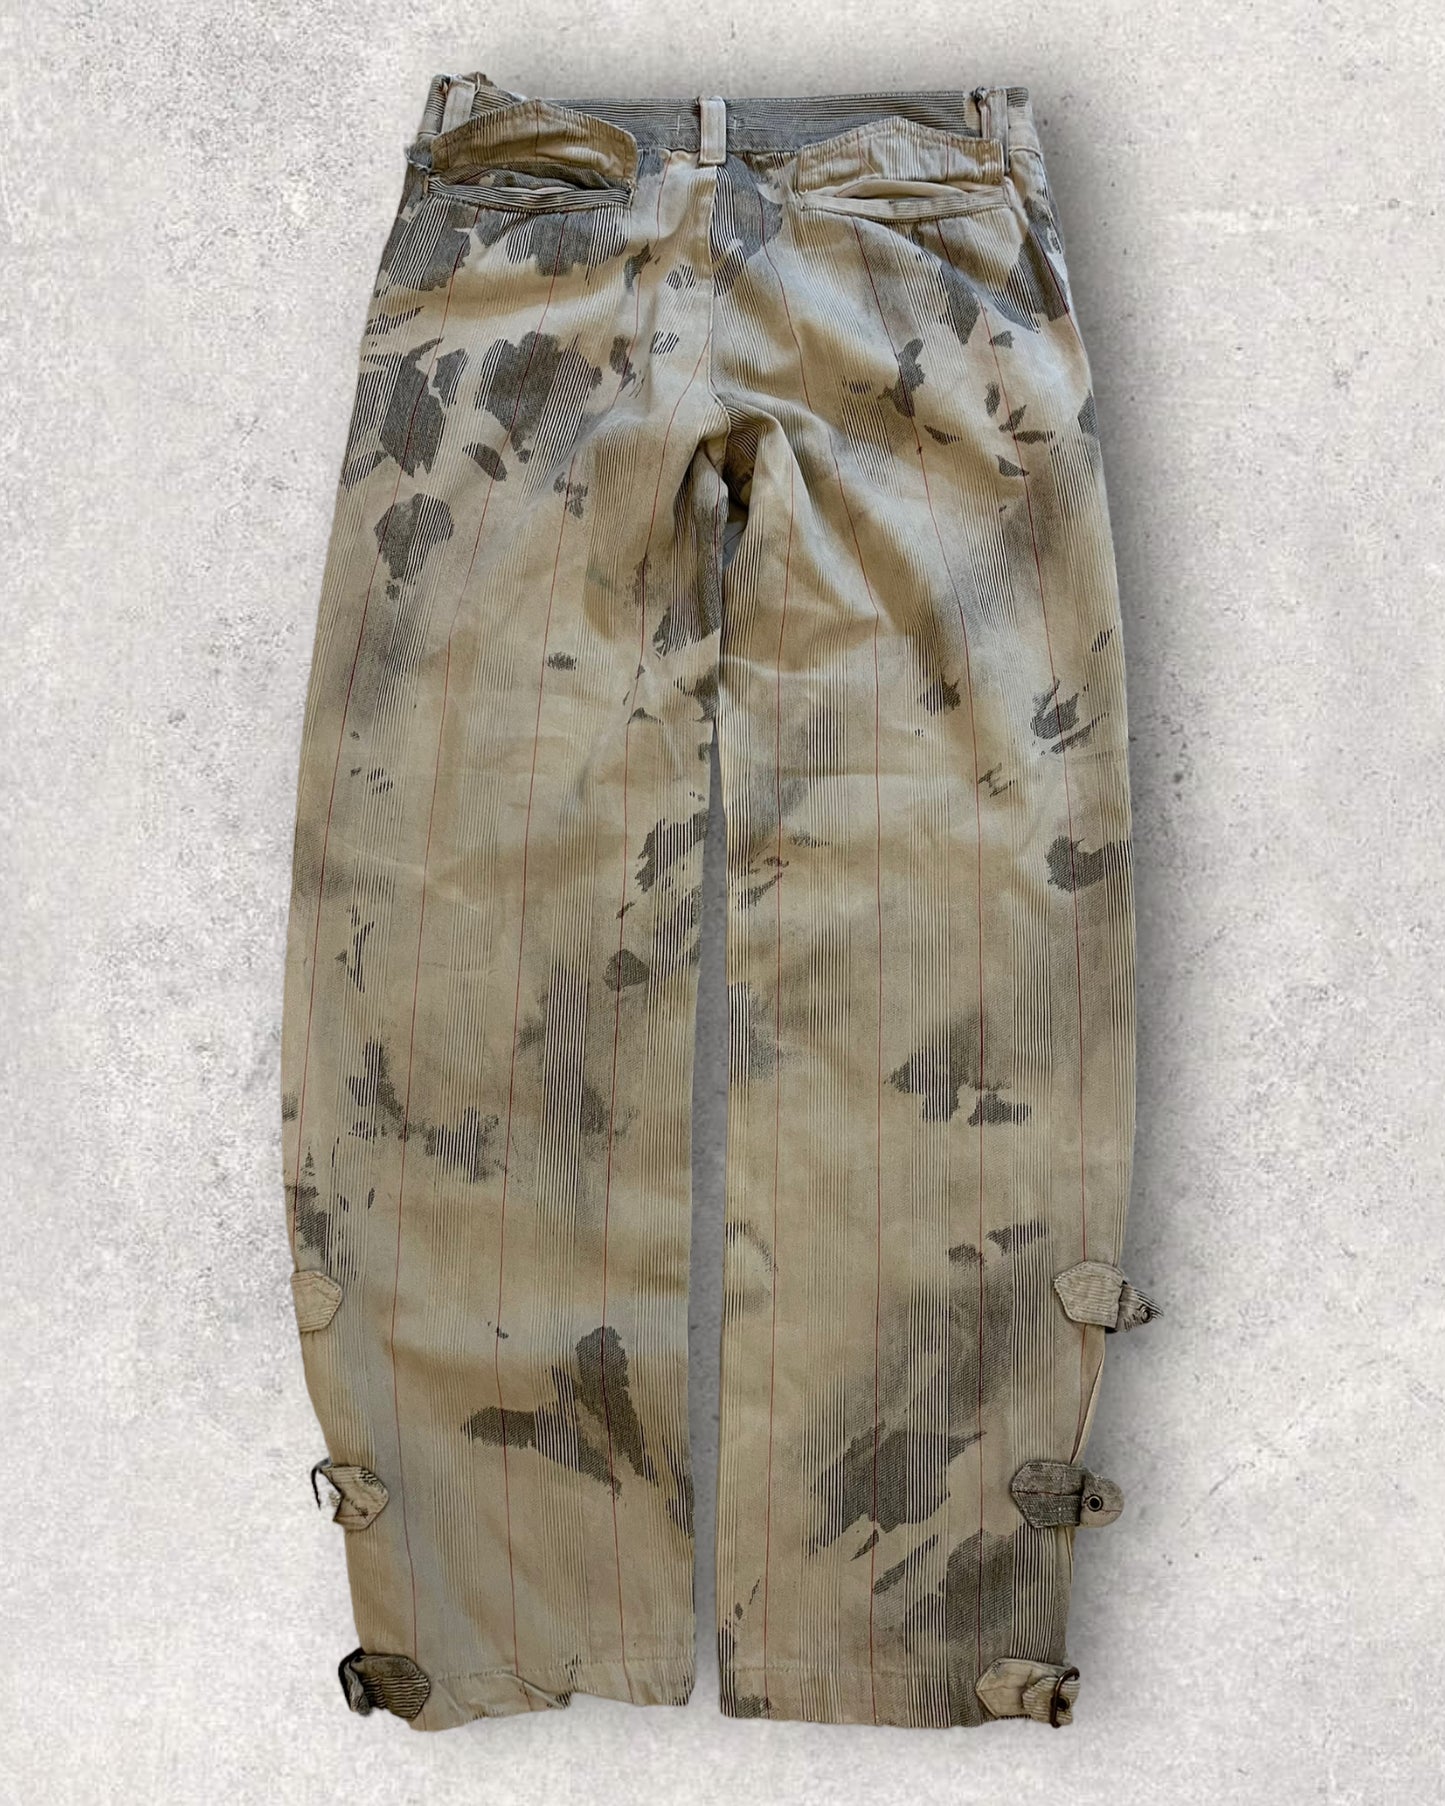 00s Utilitarian Combat Fabric Pants (M)